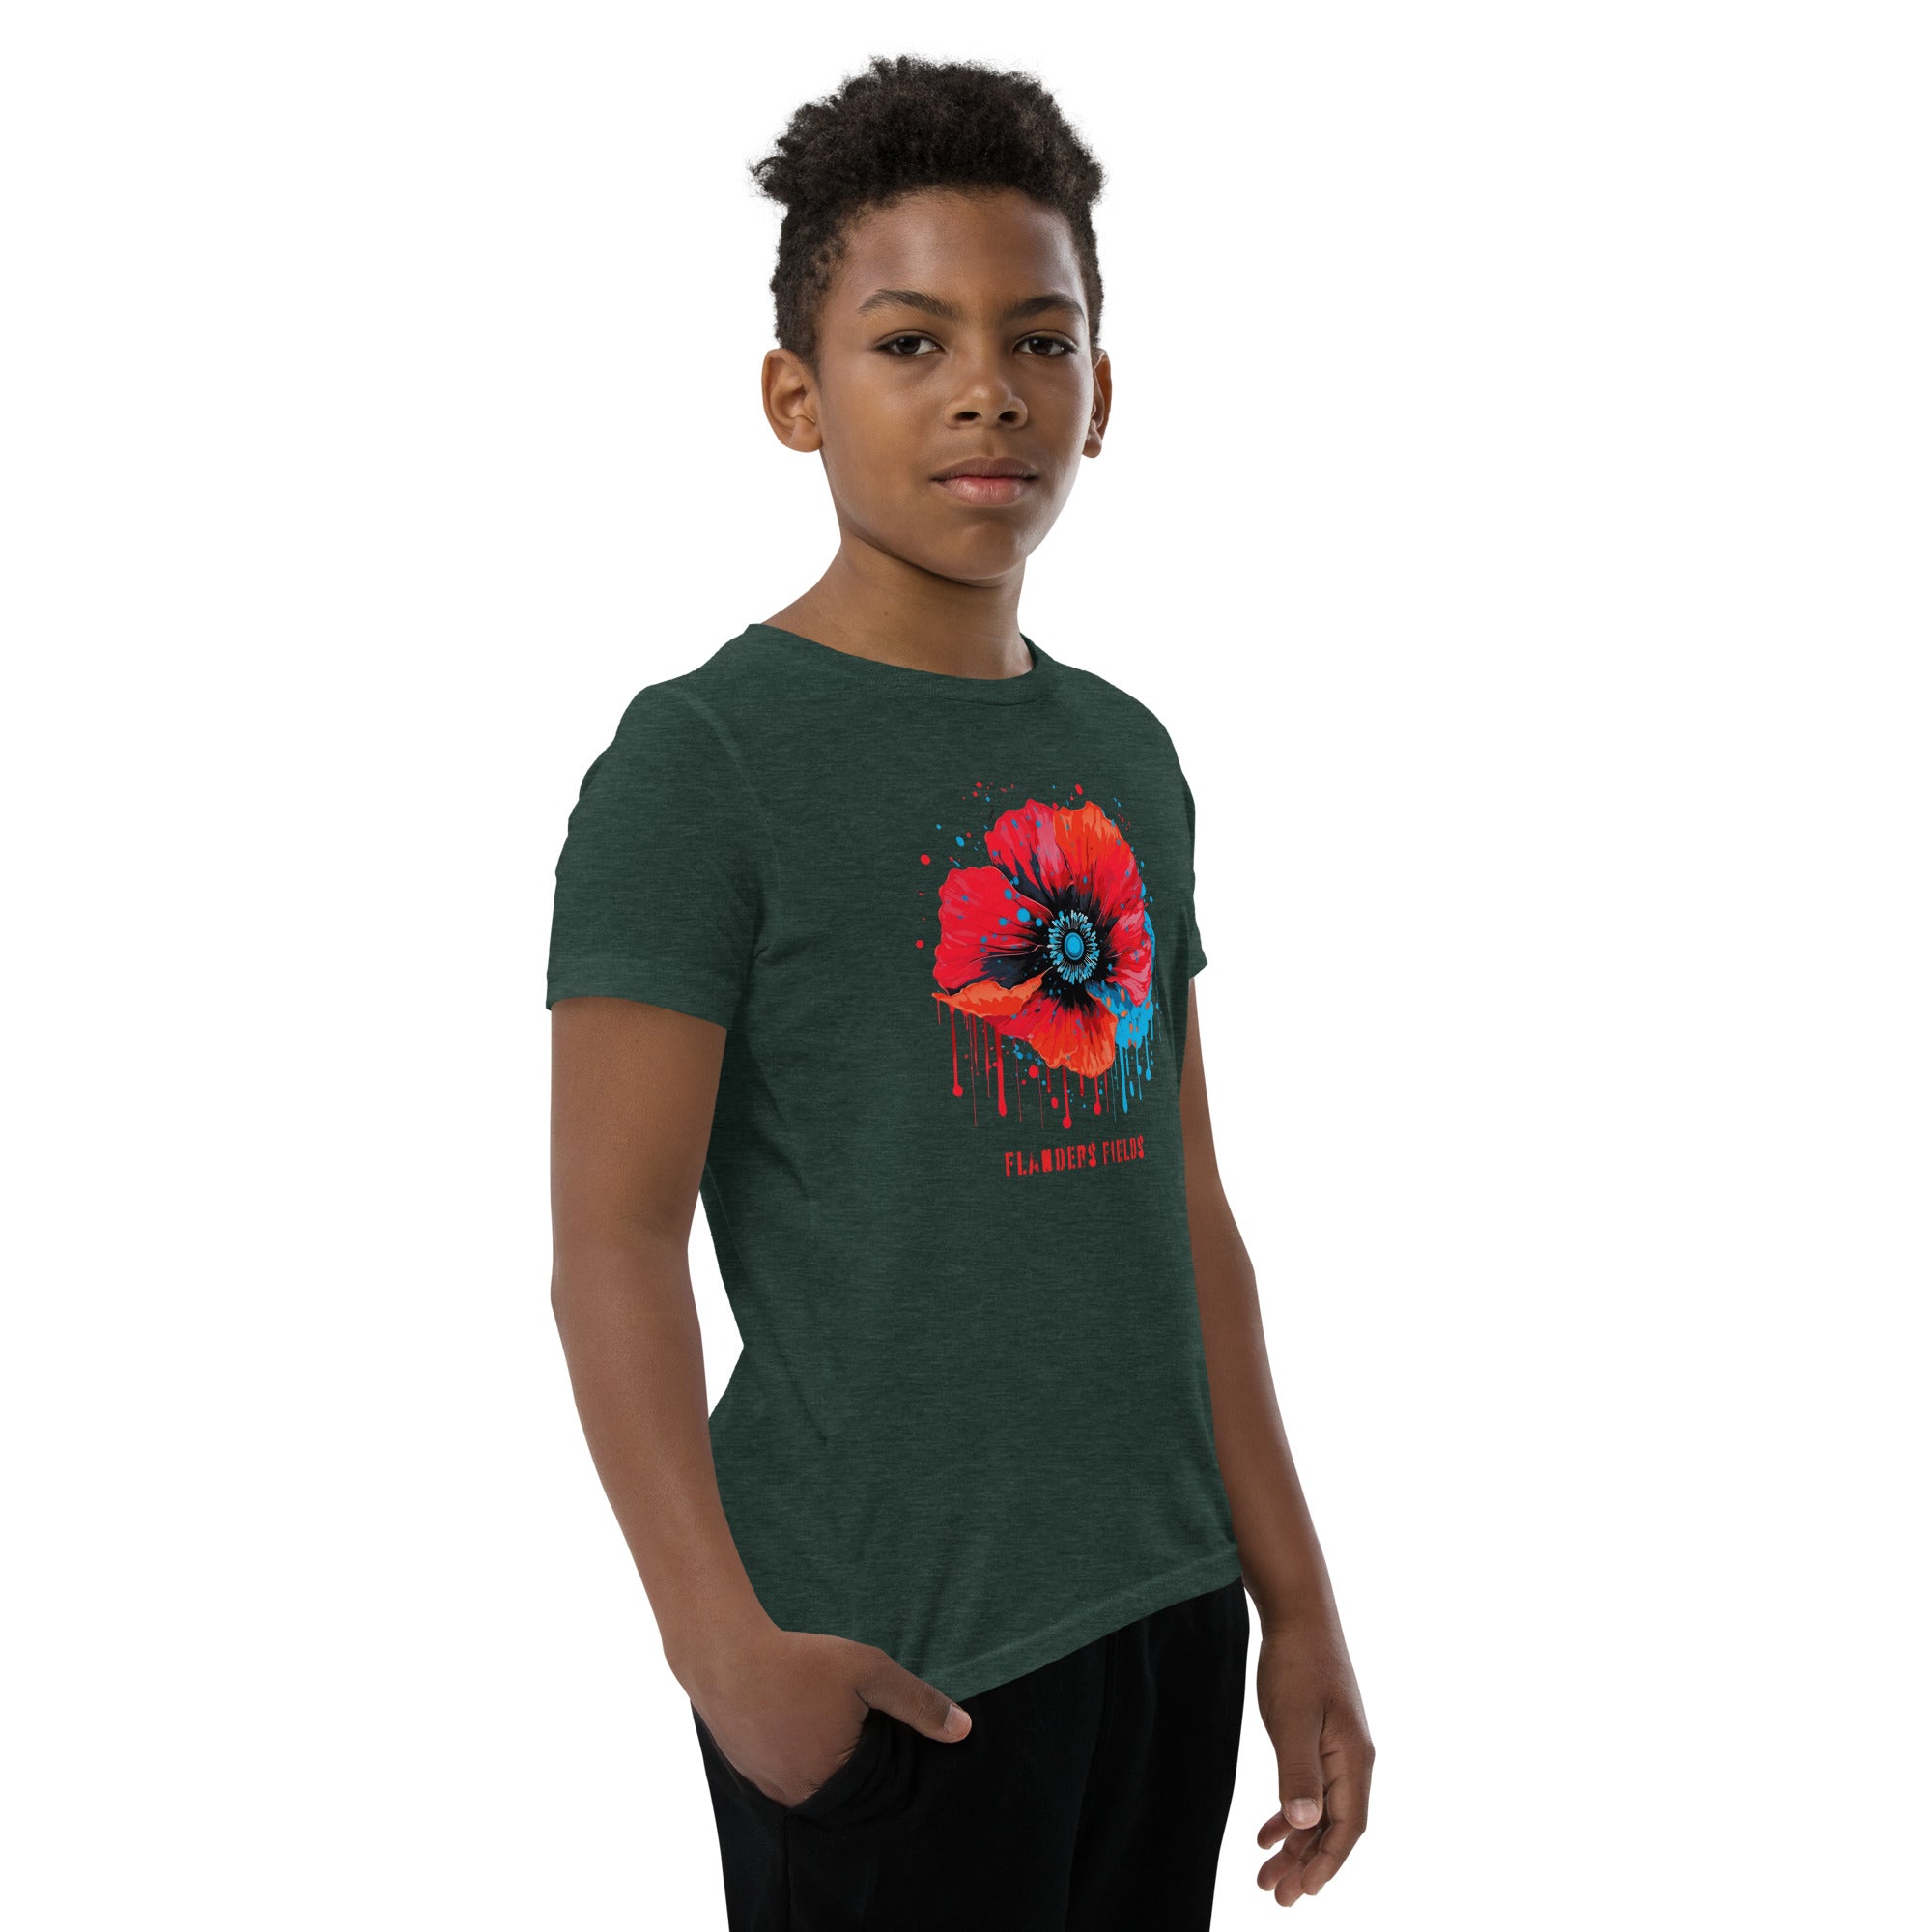 Youth Short Sleeve T-Shirt - Retro Poppy